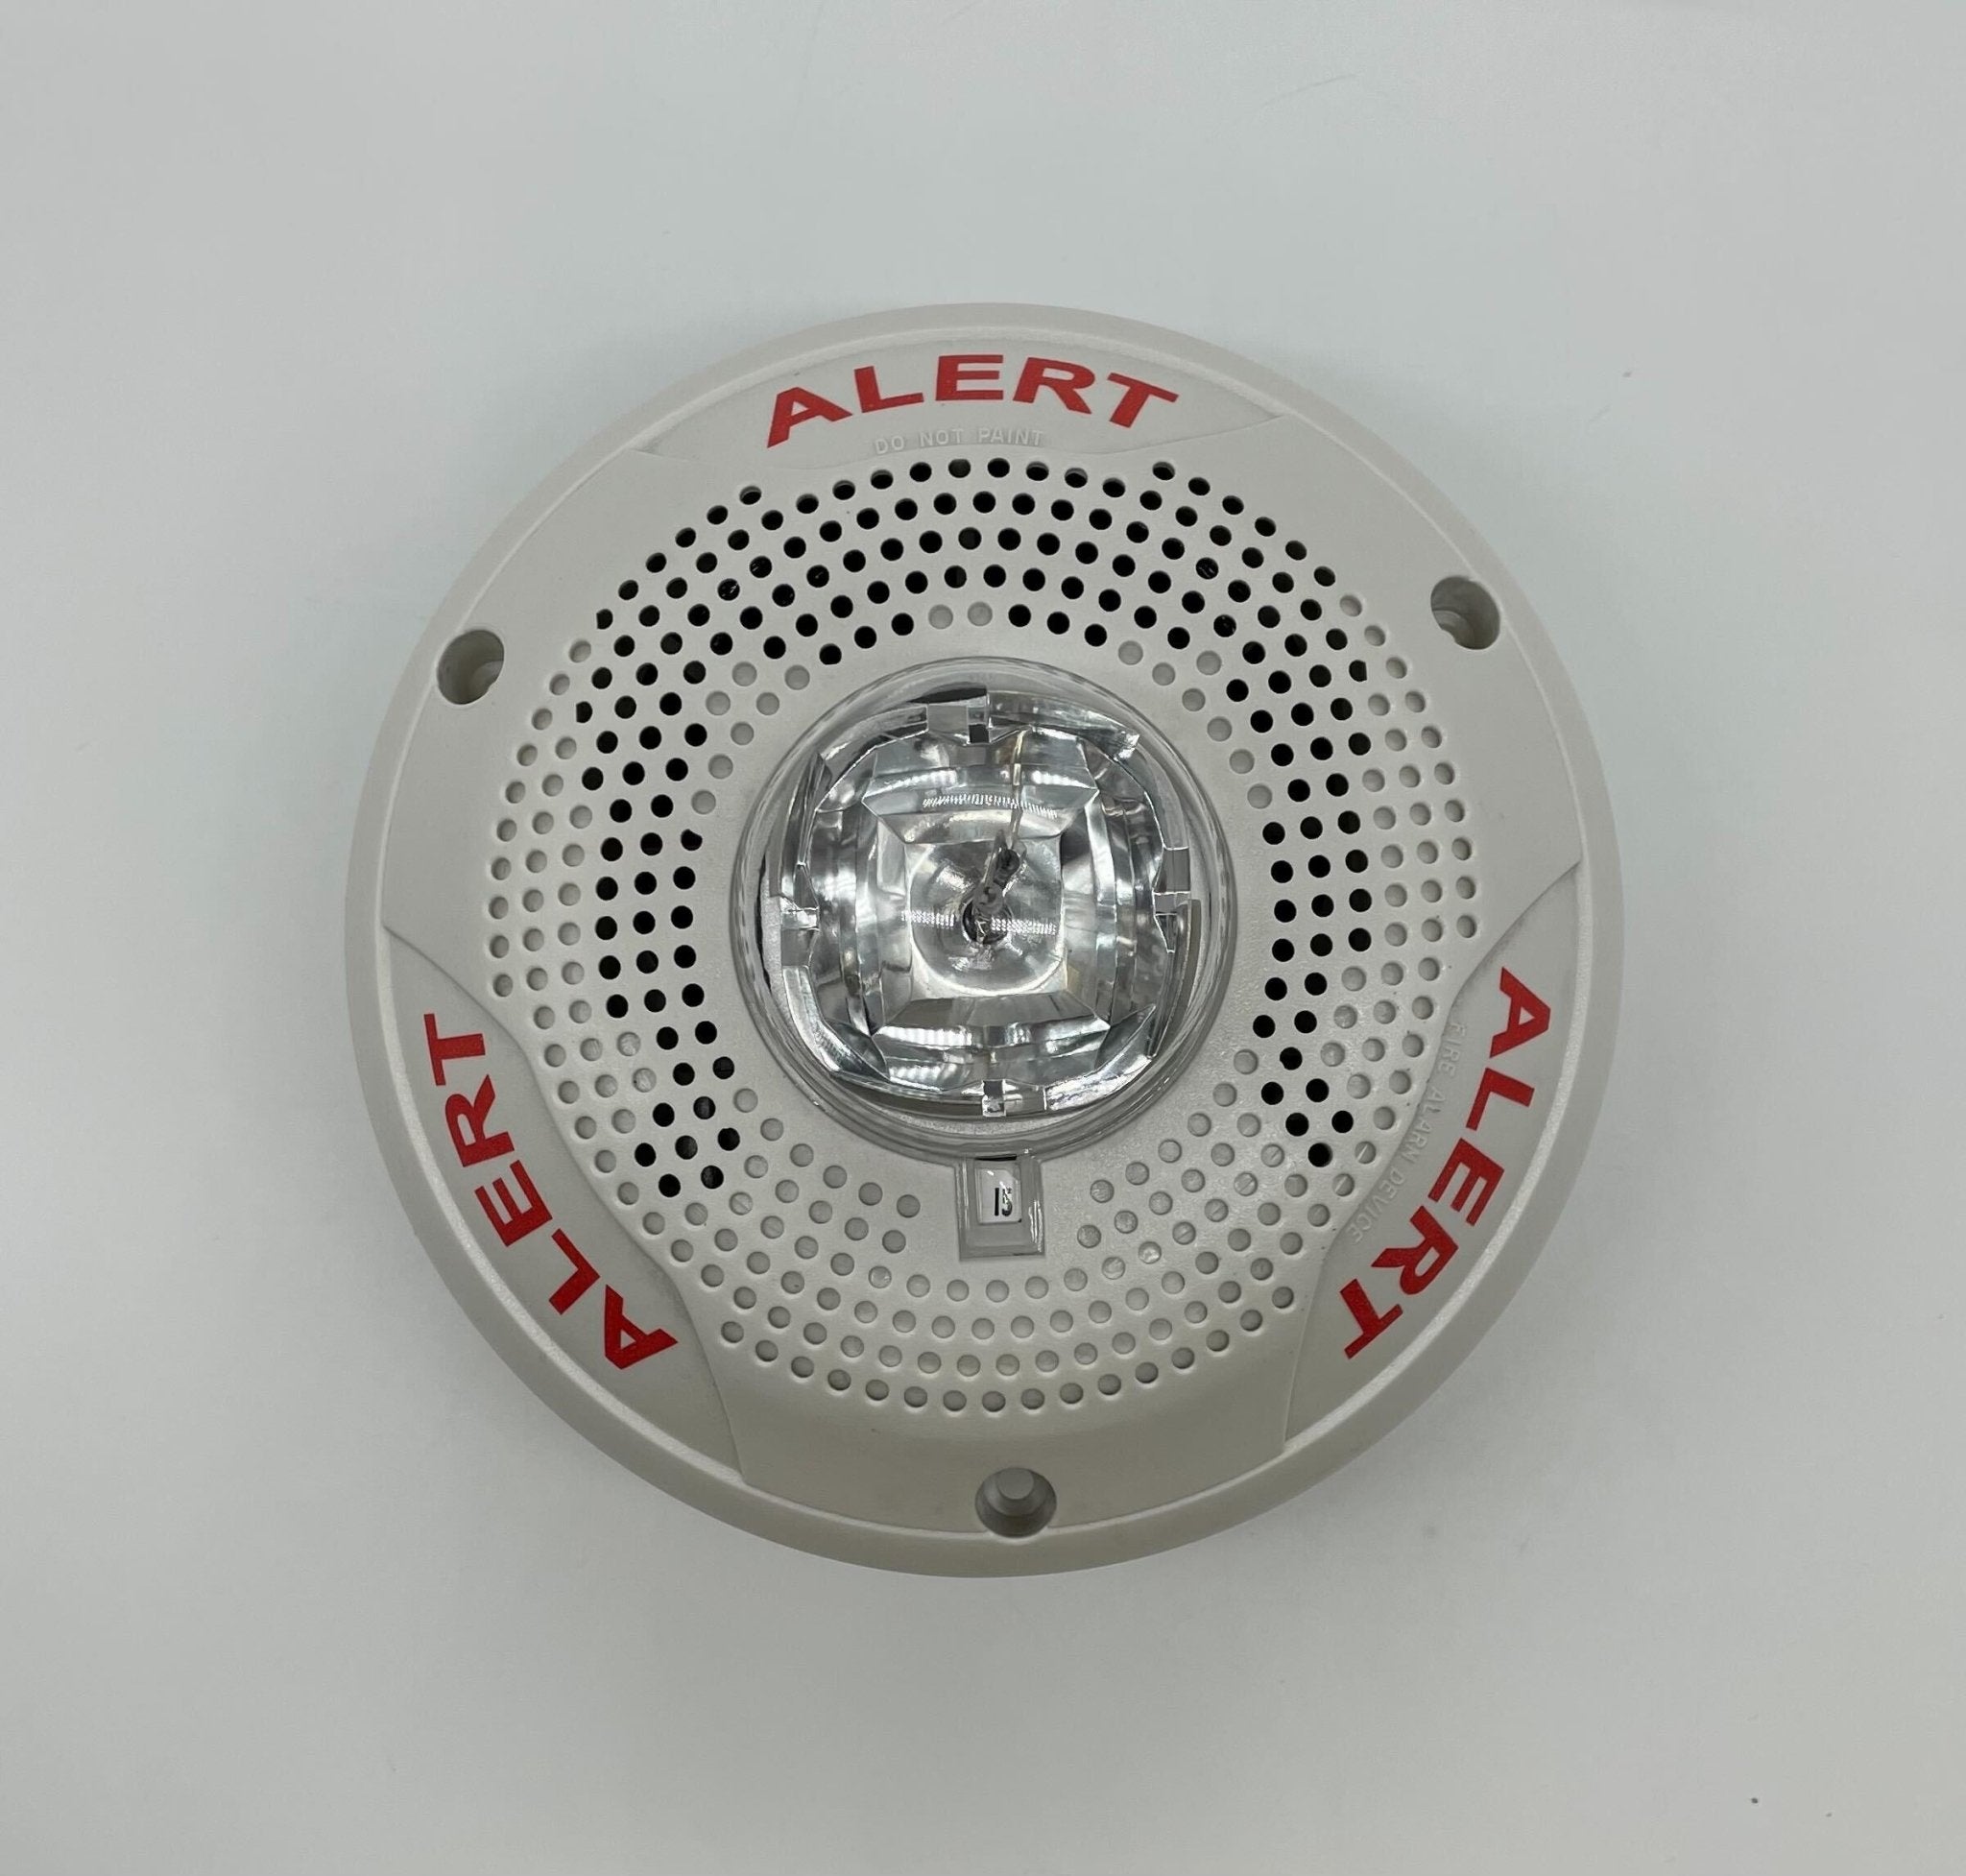 System Sensor SPSCWK-CLR-ALERT - The Fire Alarm Supplier